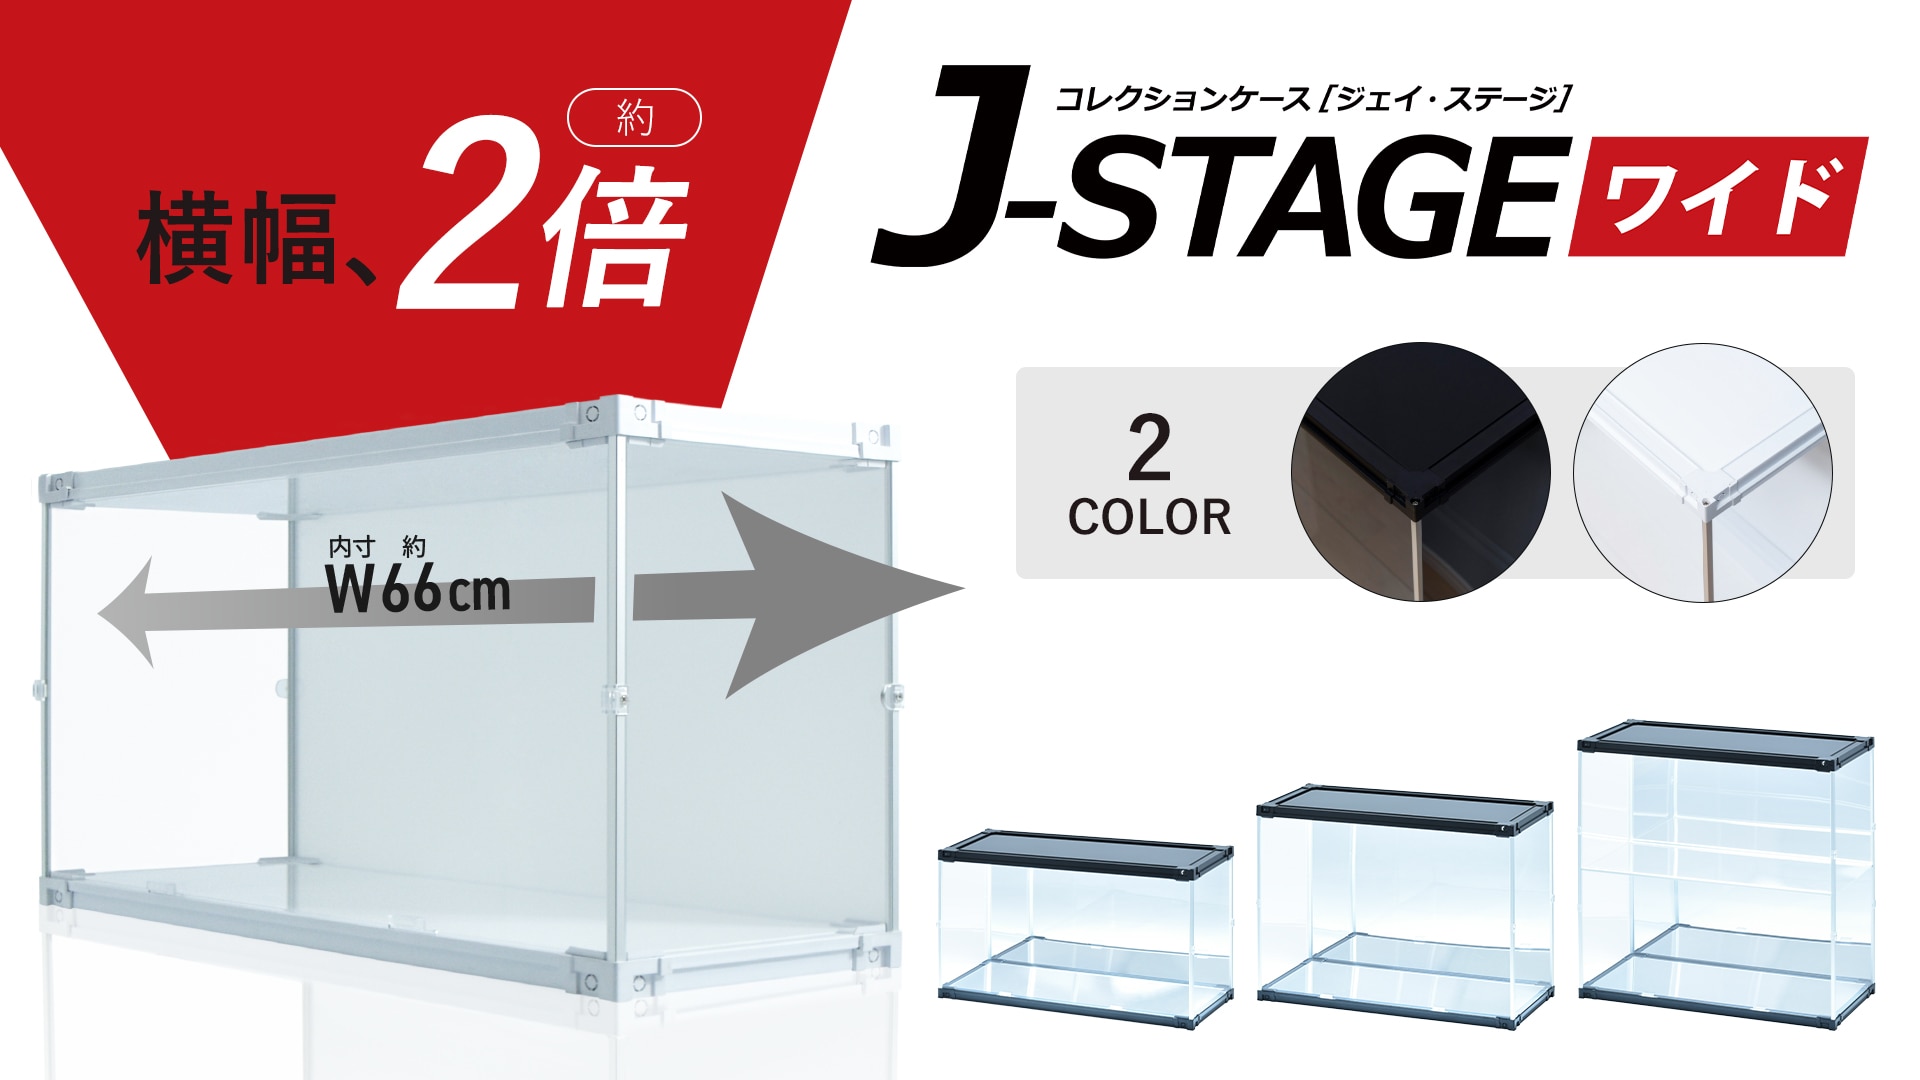 J-STAGE Ch